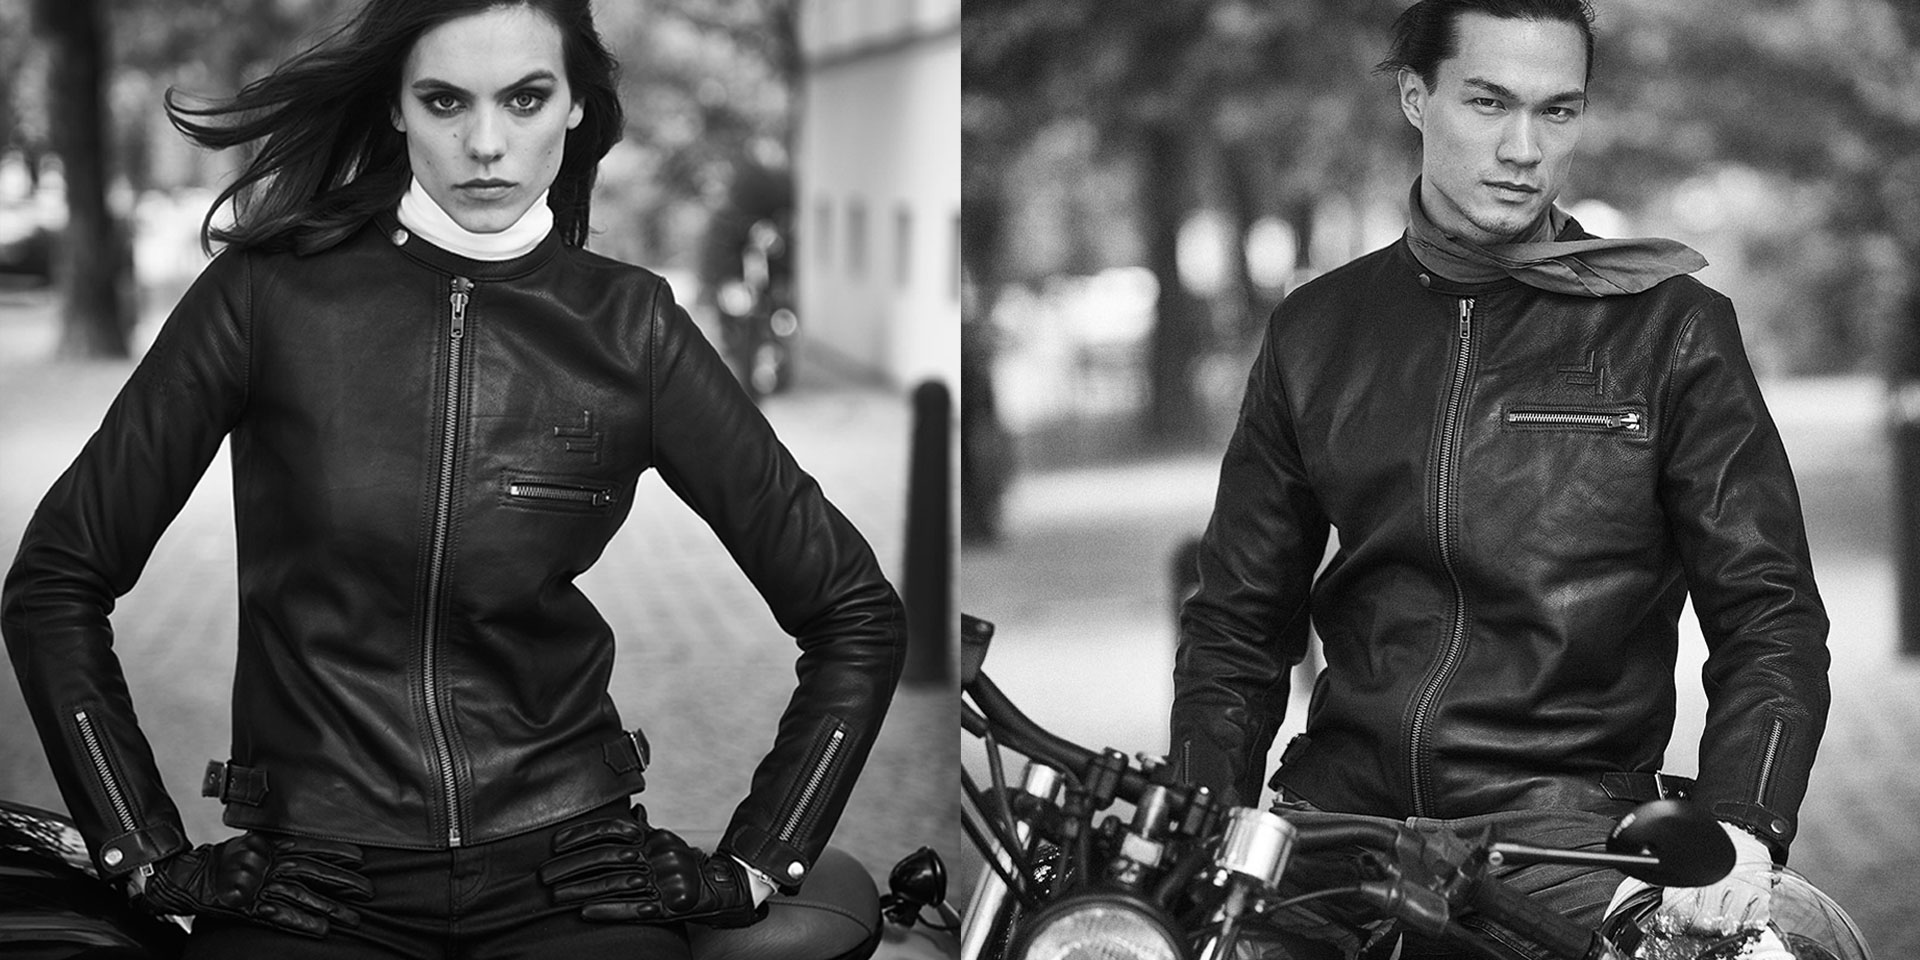 02 milani design consulting agency Taveri moto motorbike luigi taveri fashion leather startup